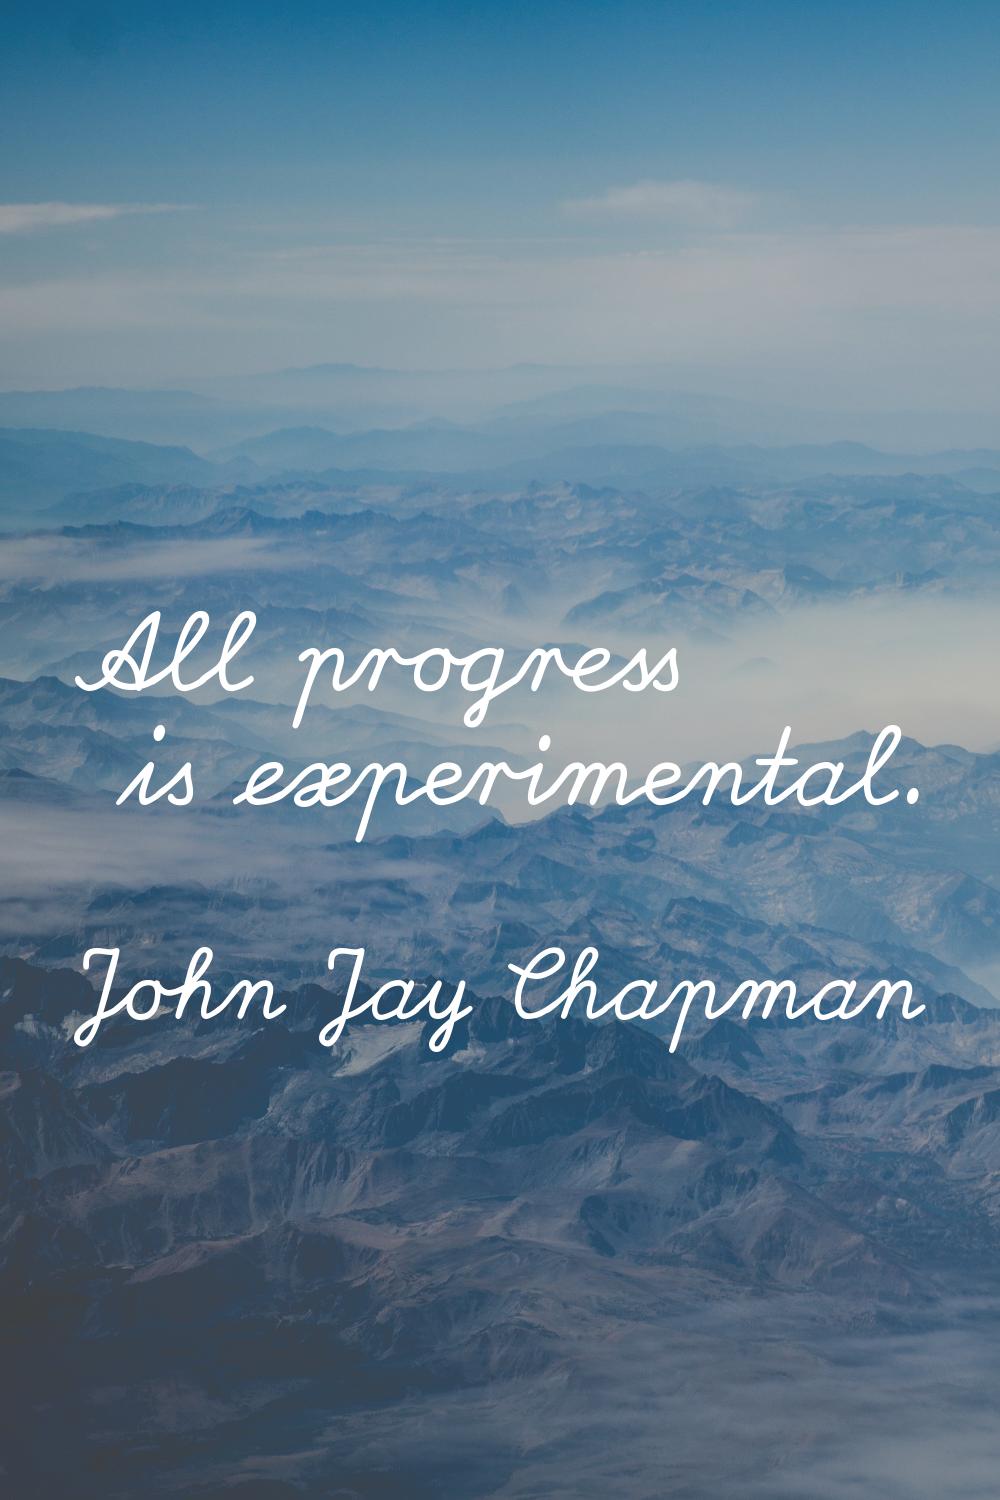 All progress is experimental.